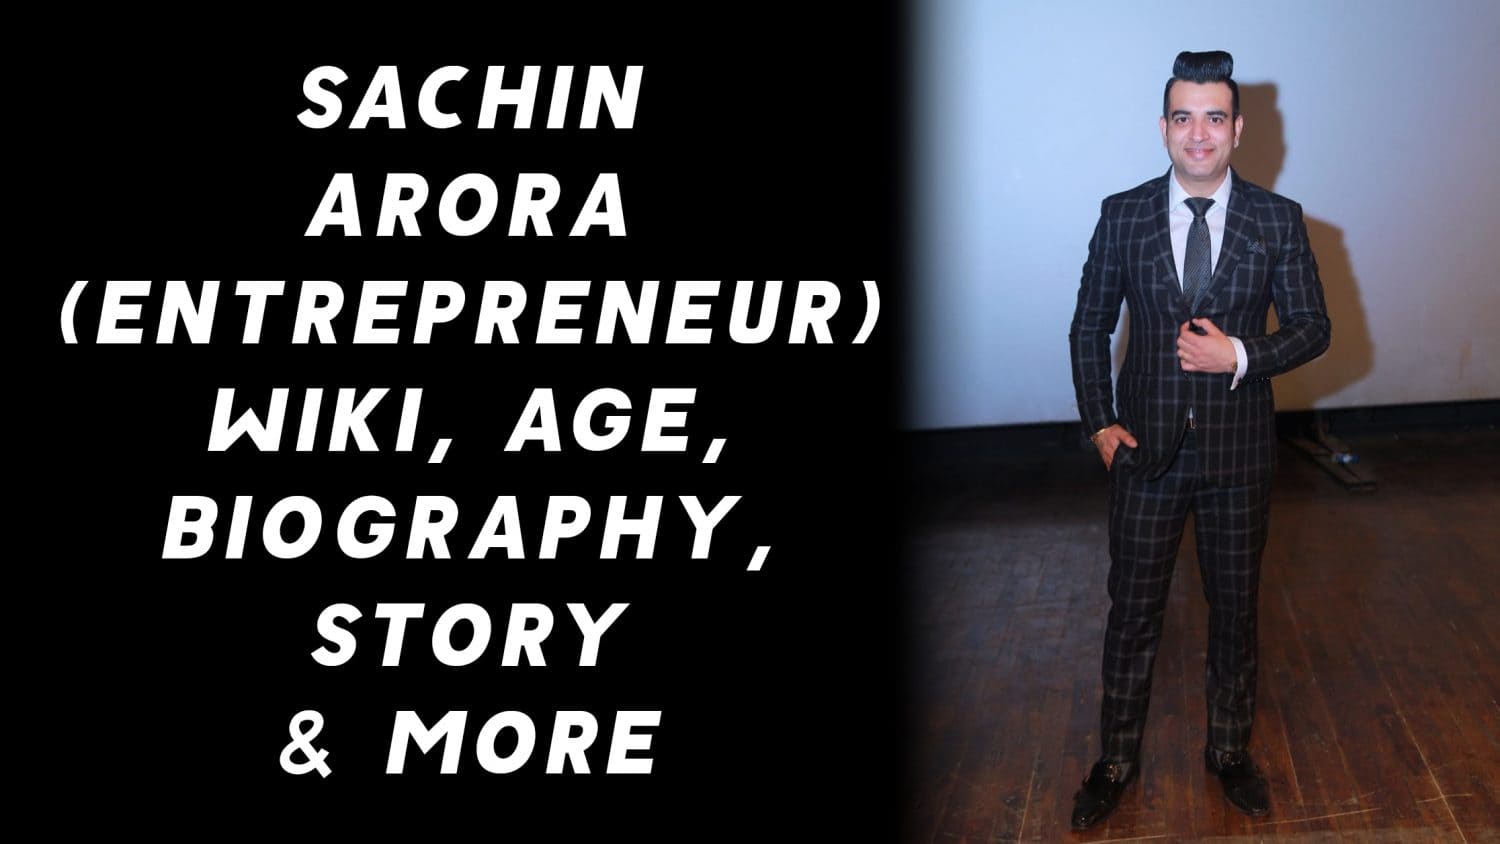 Sachin Arora (Entrepreneur) Wiki, Age, Biography, Story & More 1